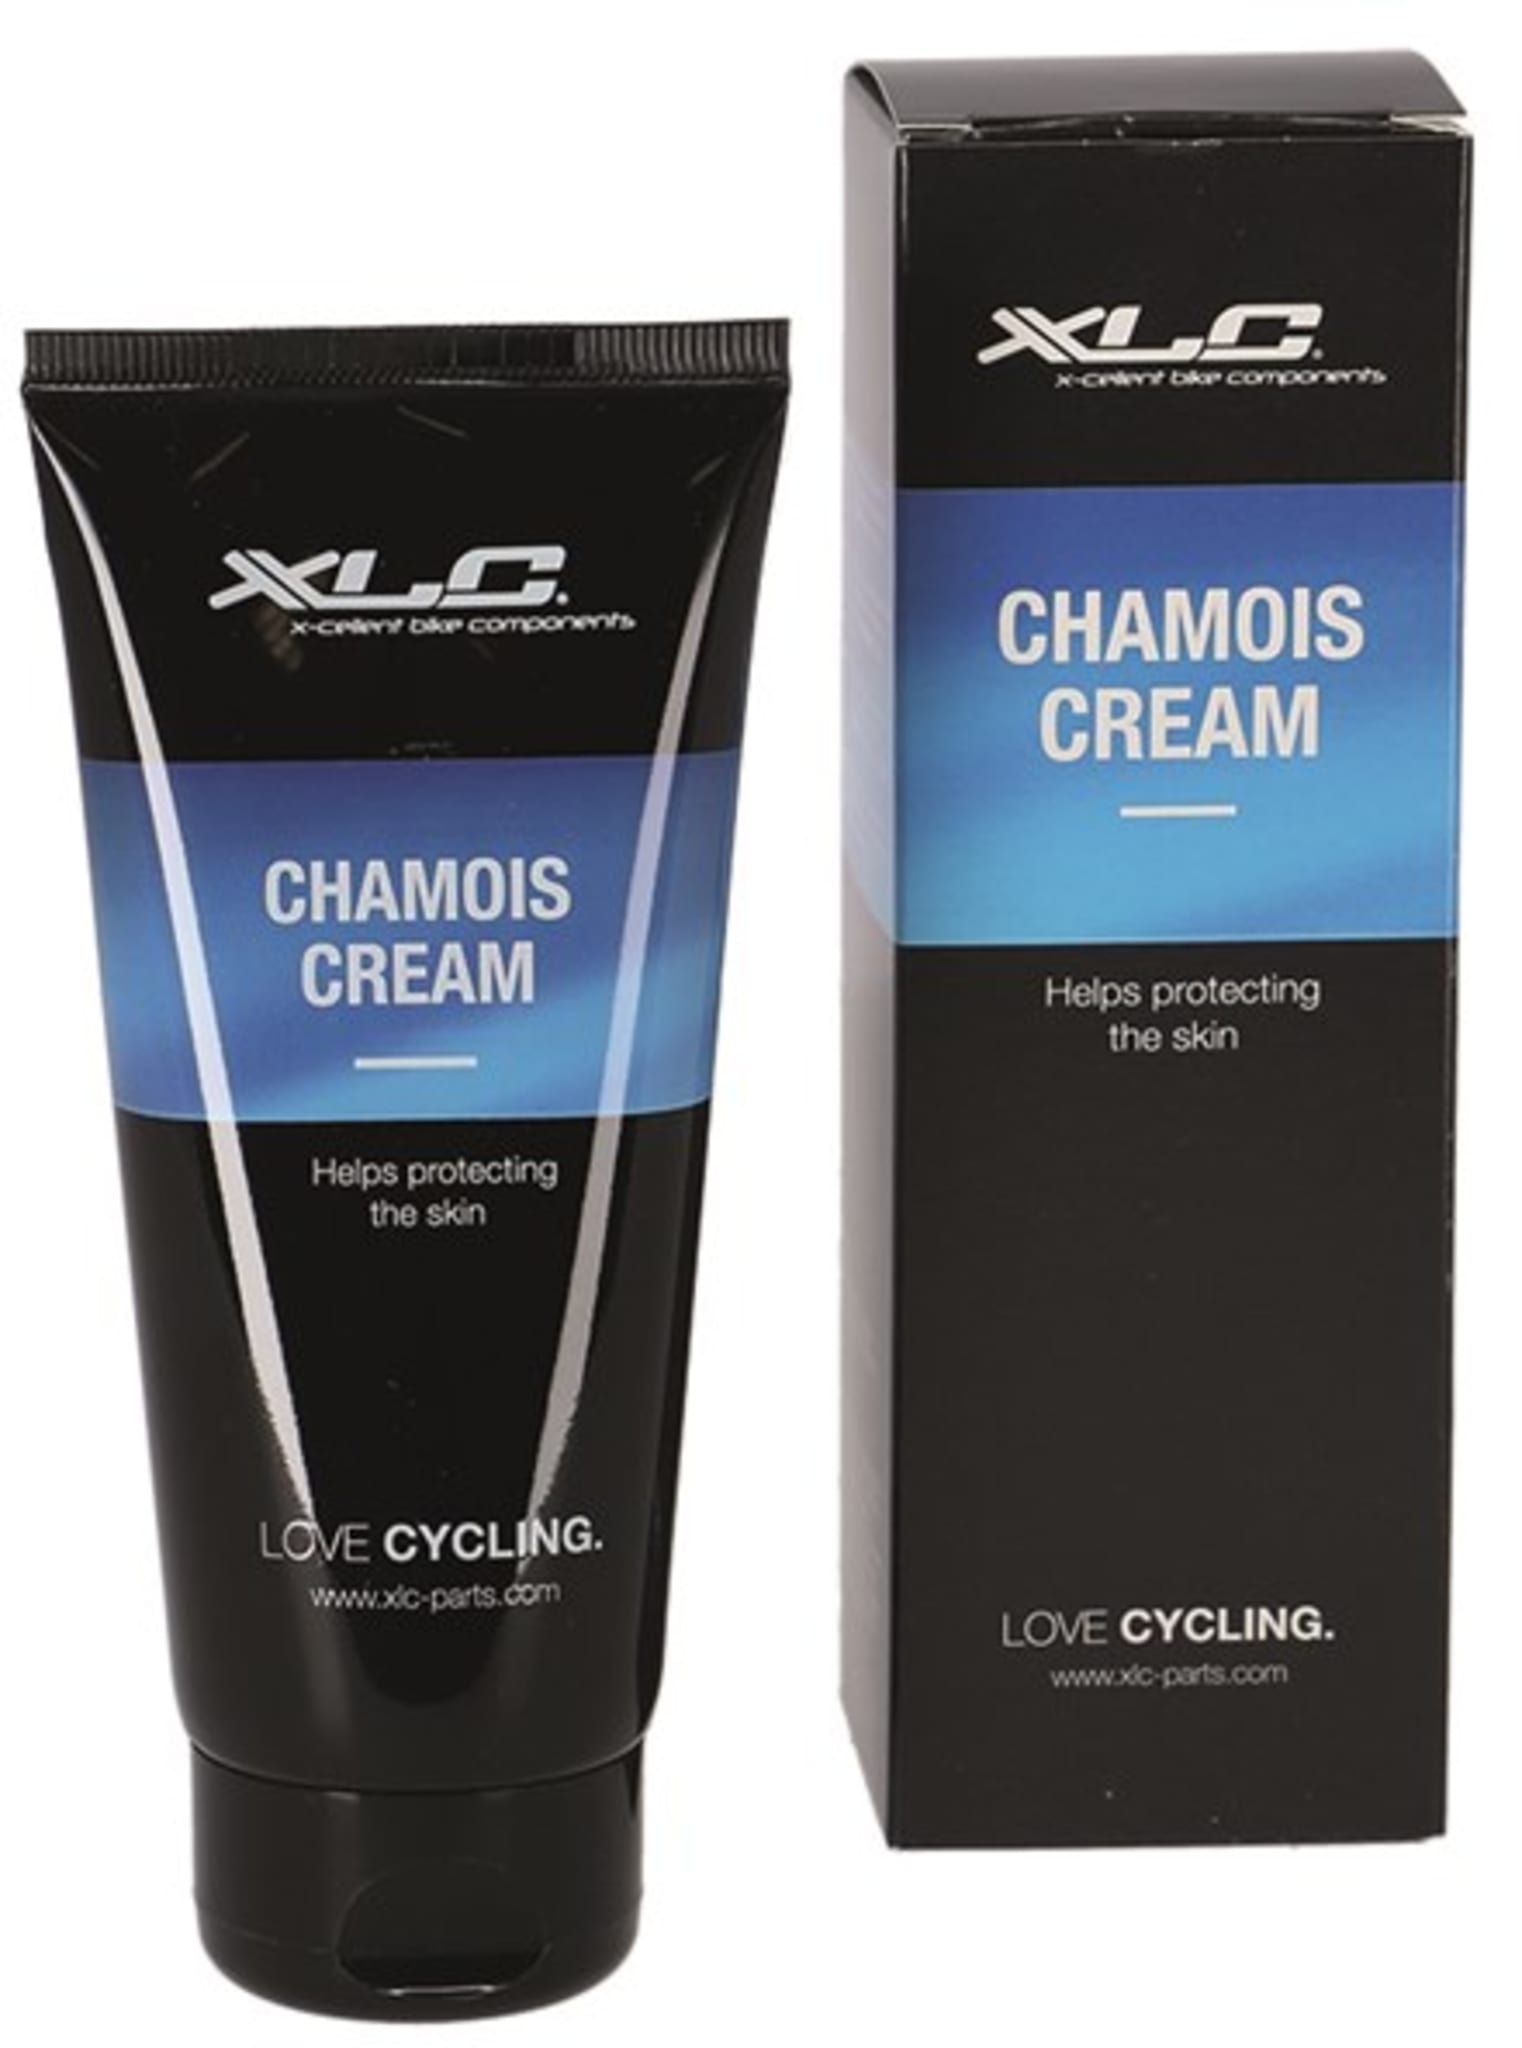 Chamois cream